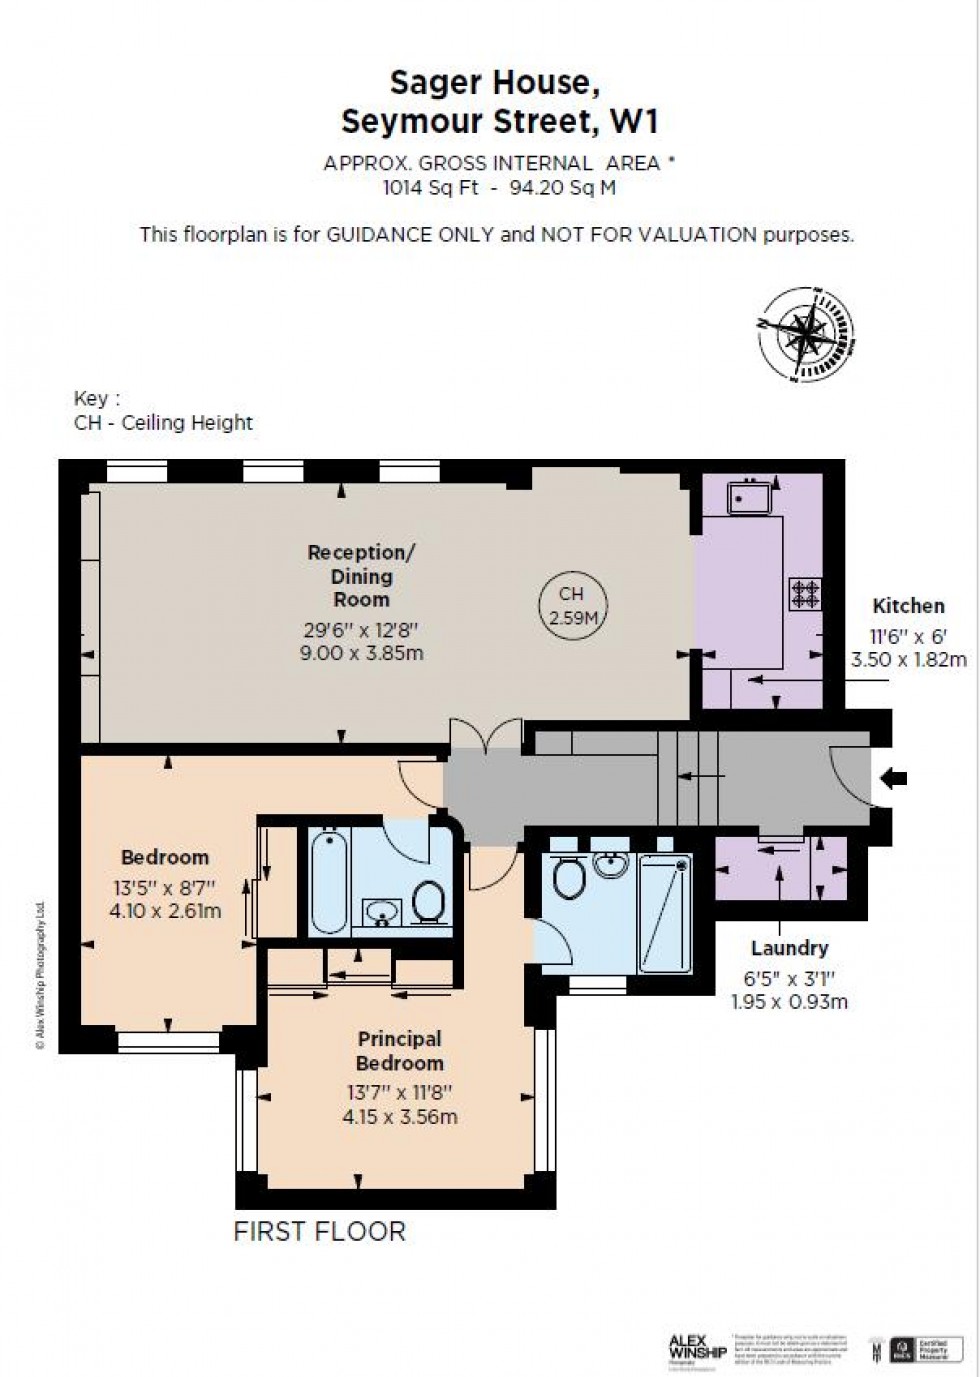 Floorplan for Sager House, Seymour Street W1H